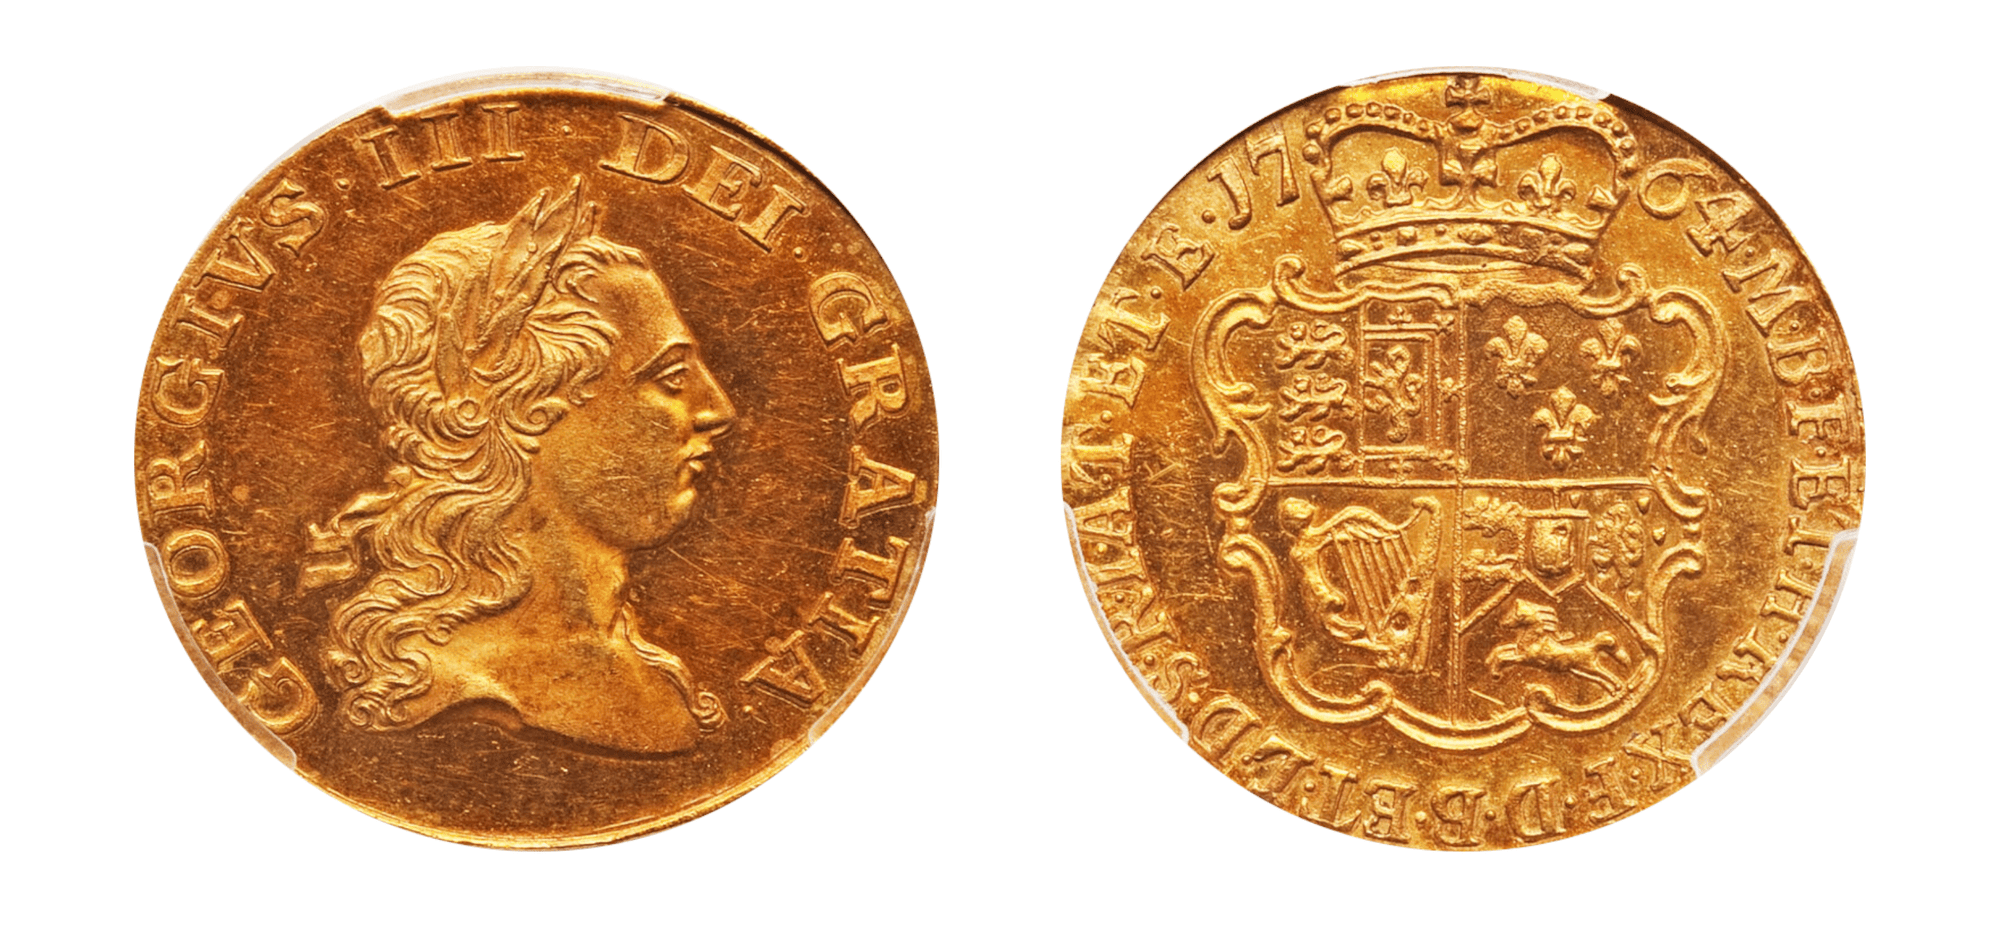 1764 George III Gold Proof 1/2 Guinea PCGS PR62+ Cameo - Hard Asset Management, Inc